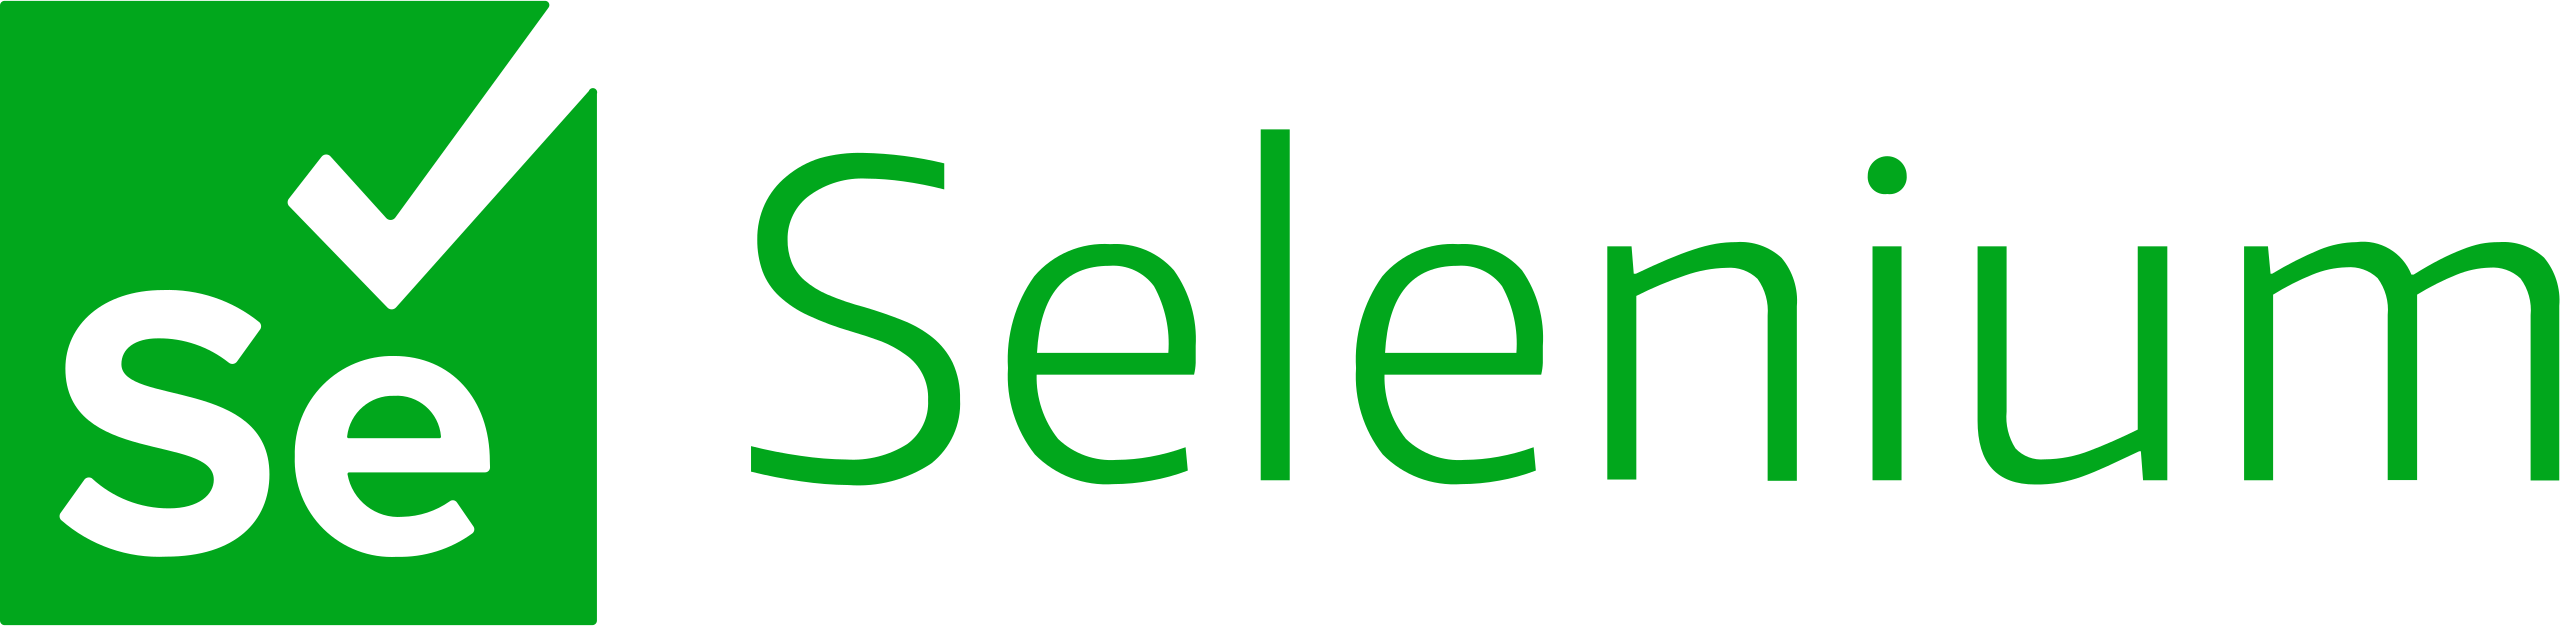 Selenium_logo.svg